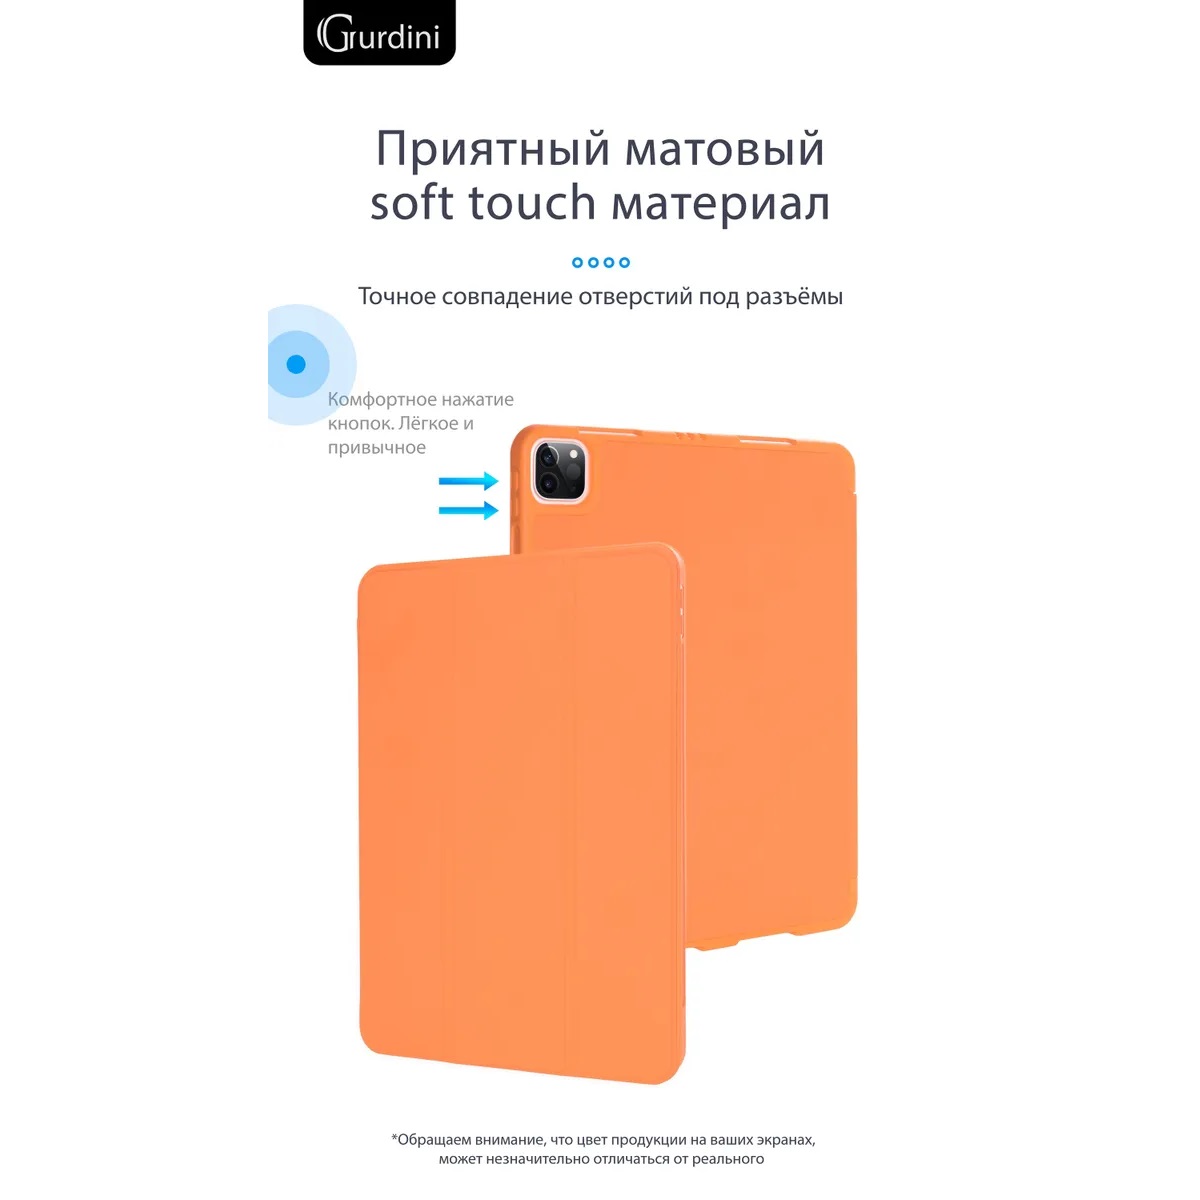 Чехол-книжка Gurdini Milano Series (pen slot) для iPad Pro 11 Orange